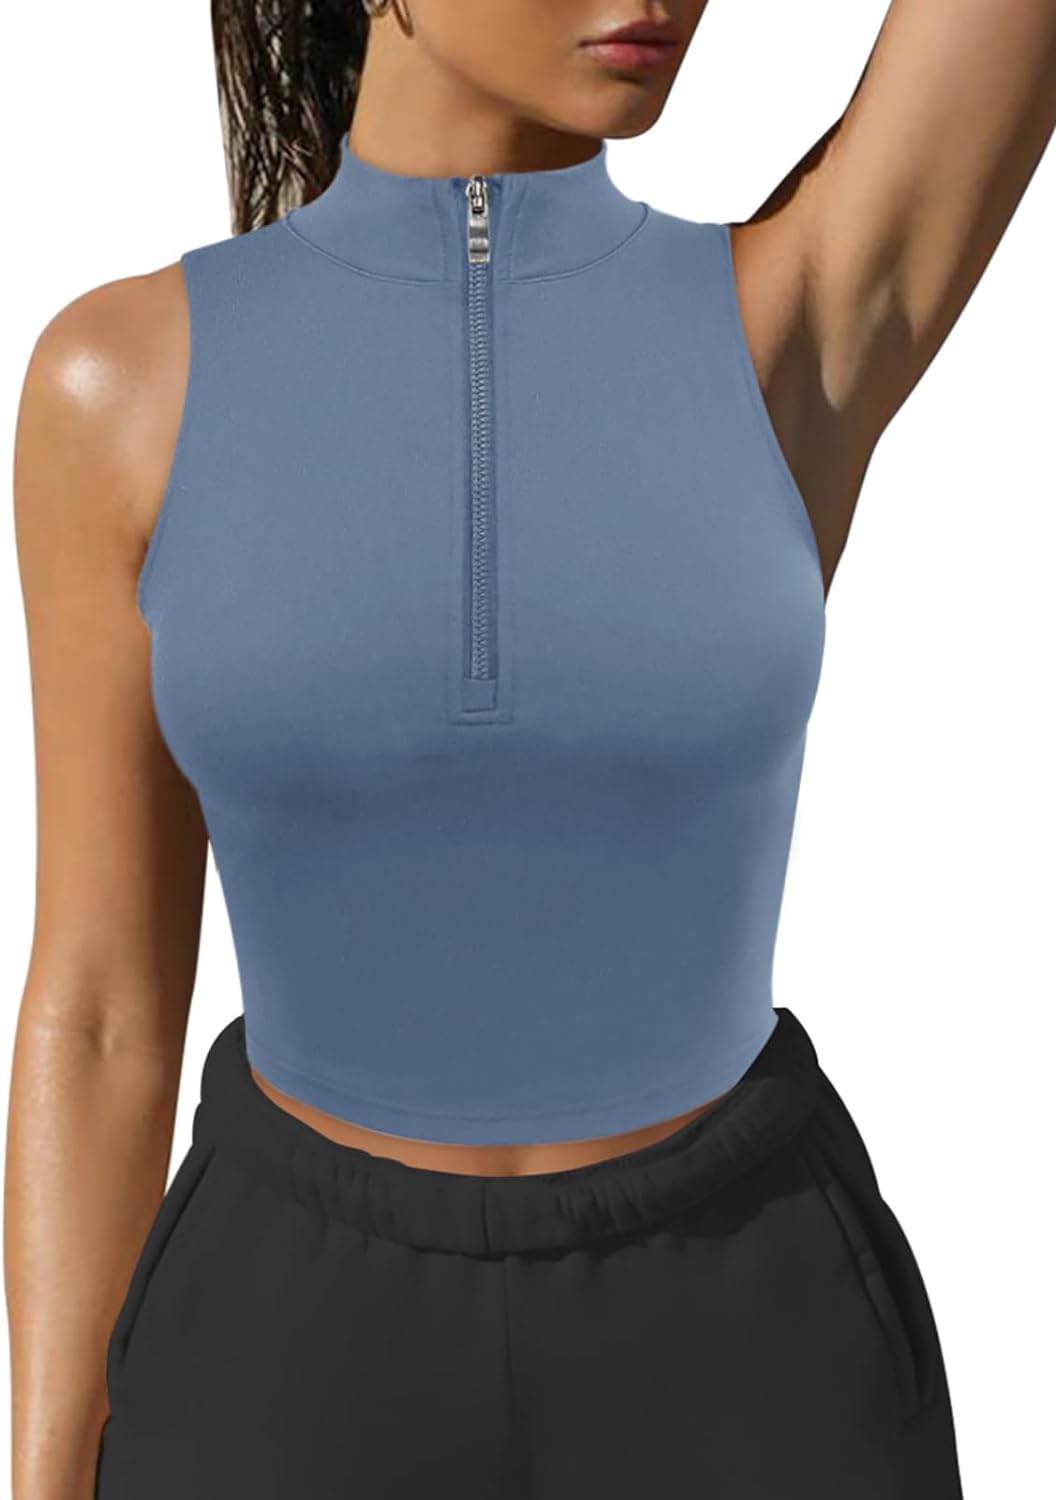 LASLULU Womens Half Zipper Workout Top Racerback Yoga Short Tank Tops Collar Athletic Shirt Slim Fit Crop Tops Built in Bra